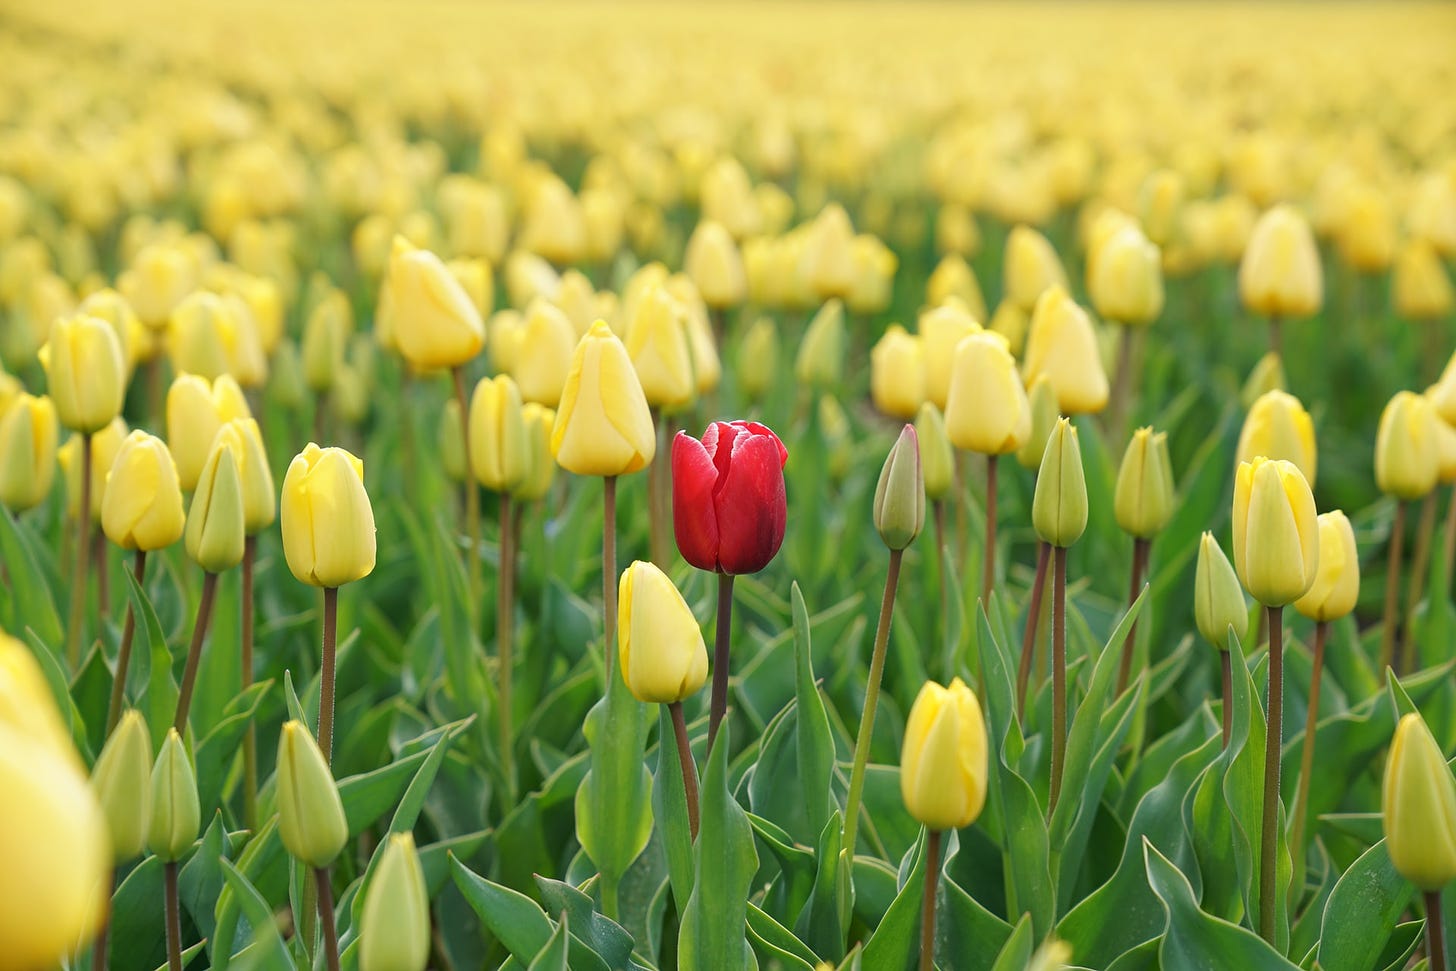 Red flower in field of yellow flowers